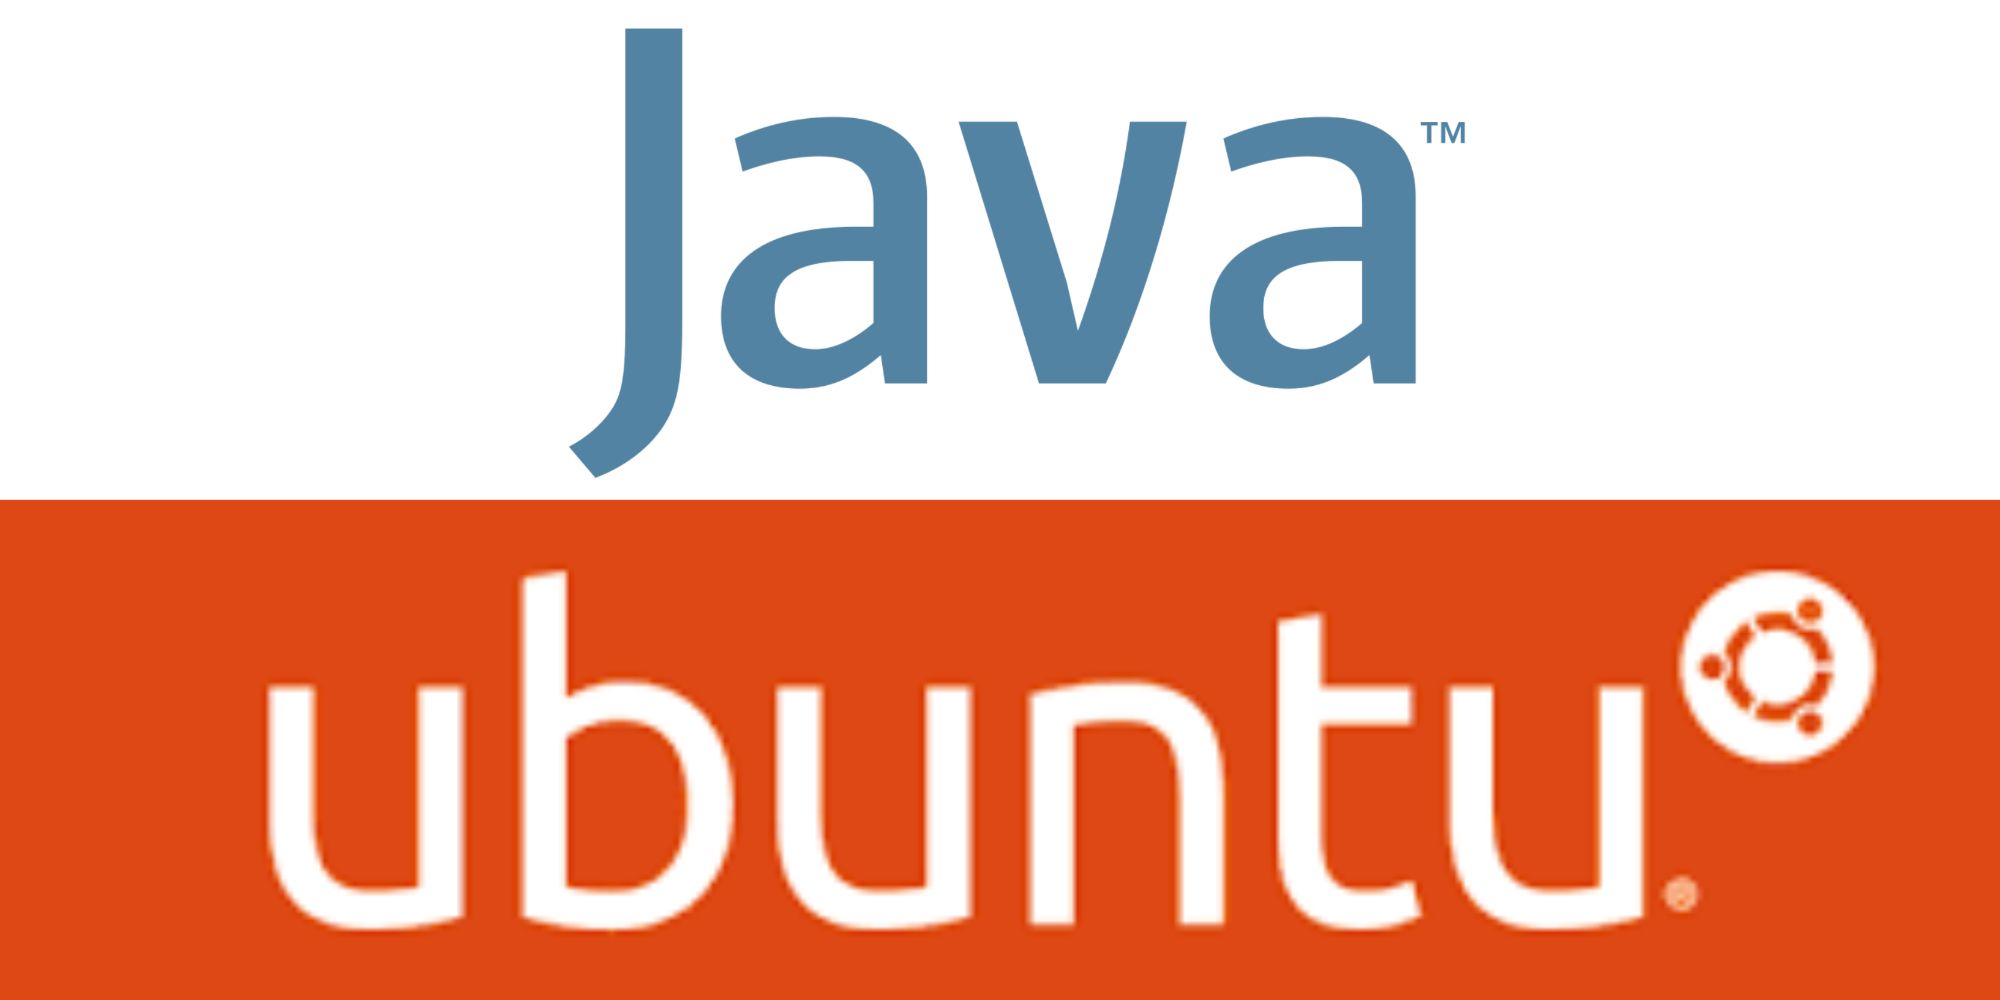 Java and Ubuntu logo collage.